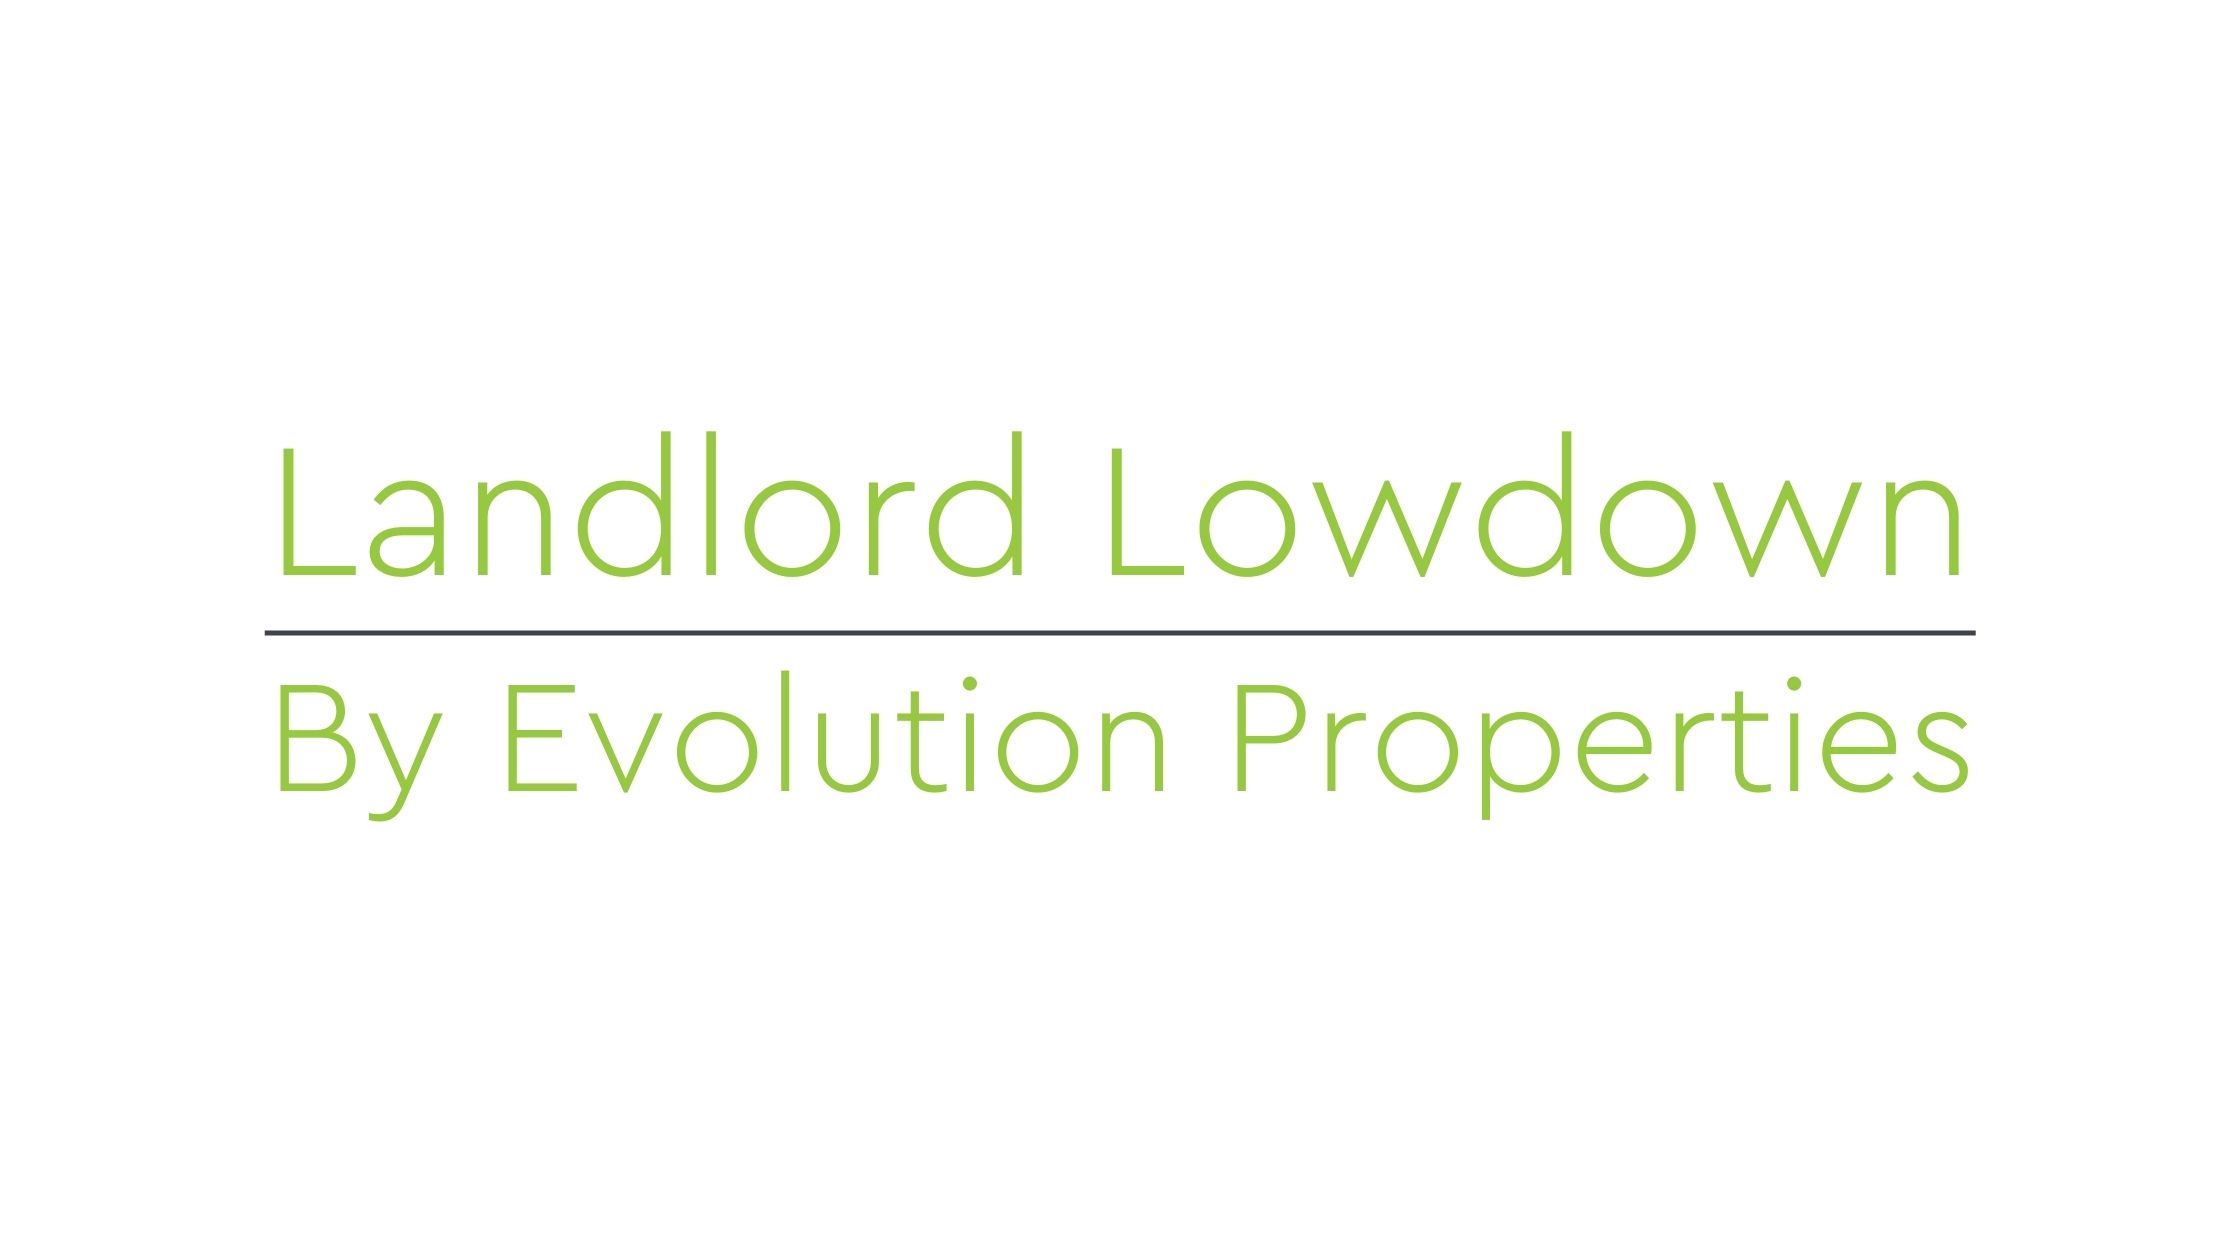 Landlord Lowdown - GDPR.